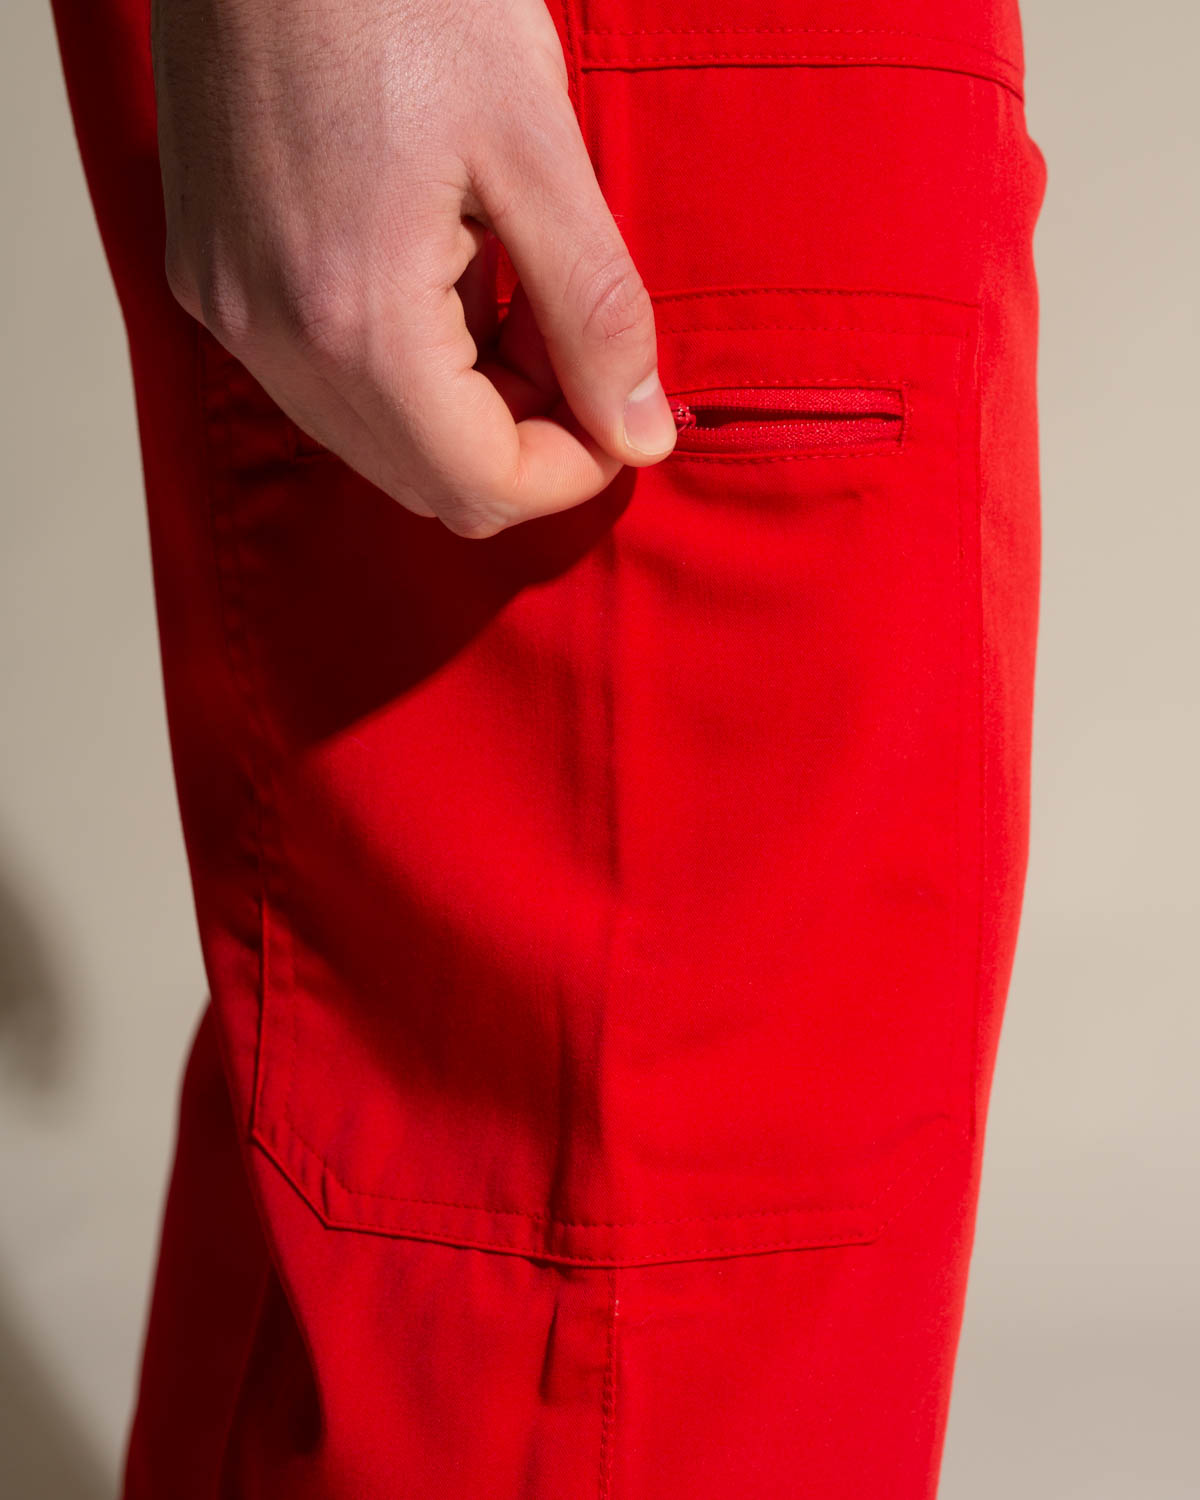 Pantalón Hombre Rojo, Uniformes Clínicos